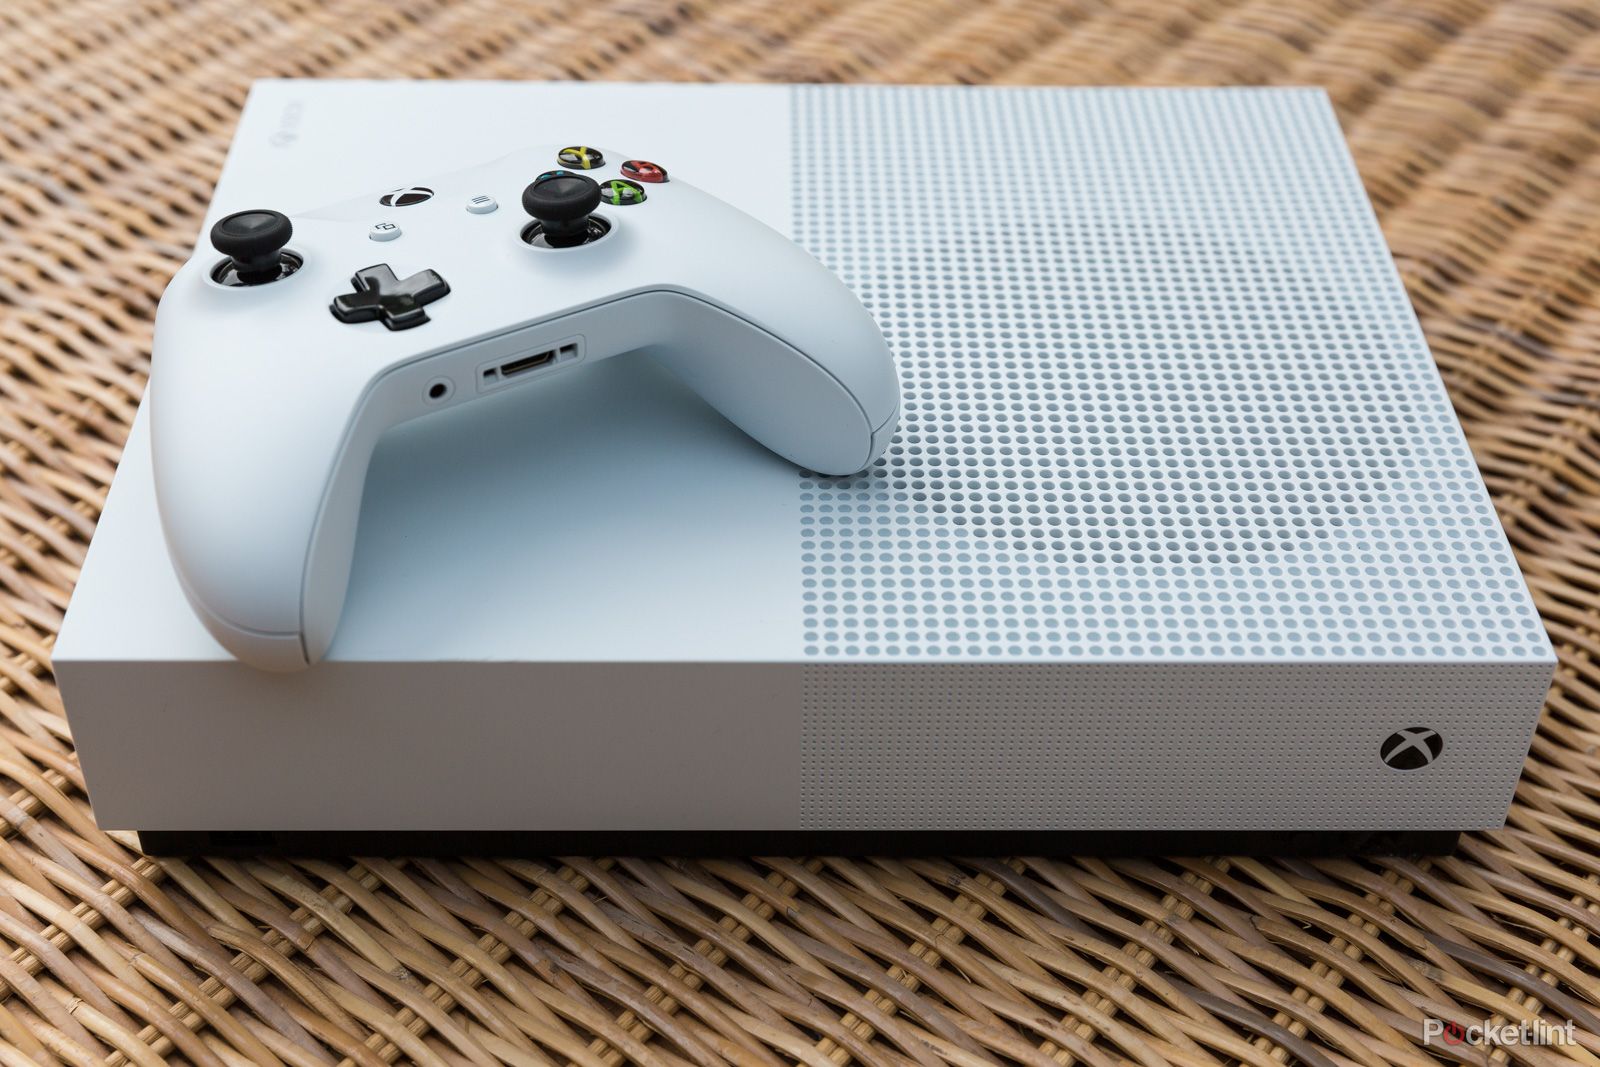 Con fecha de semiconductor barro Xbox One S All-Digital Edition review - Pocket-lint